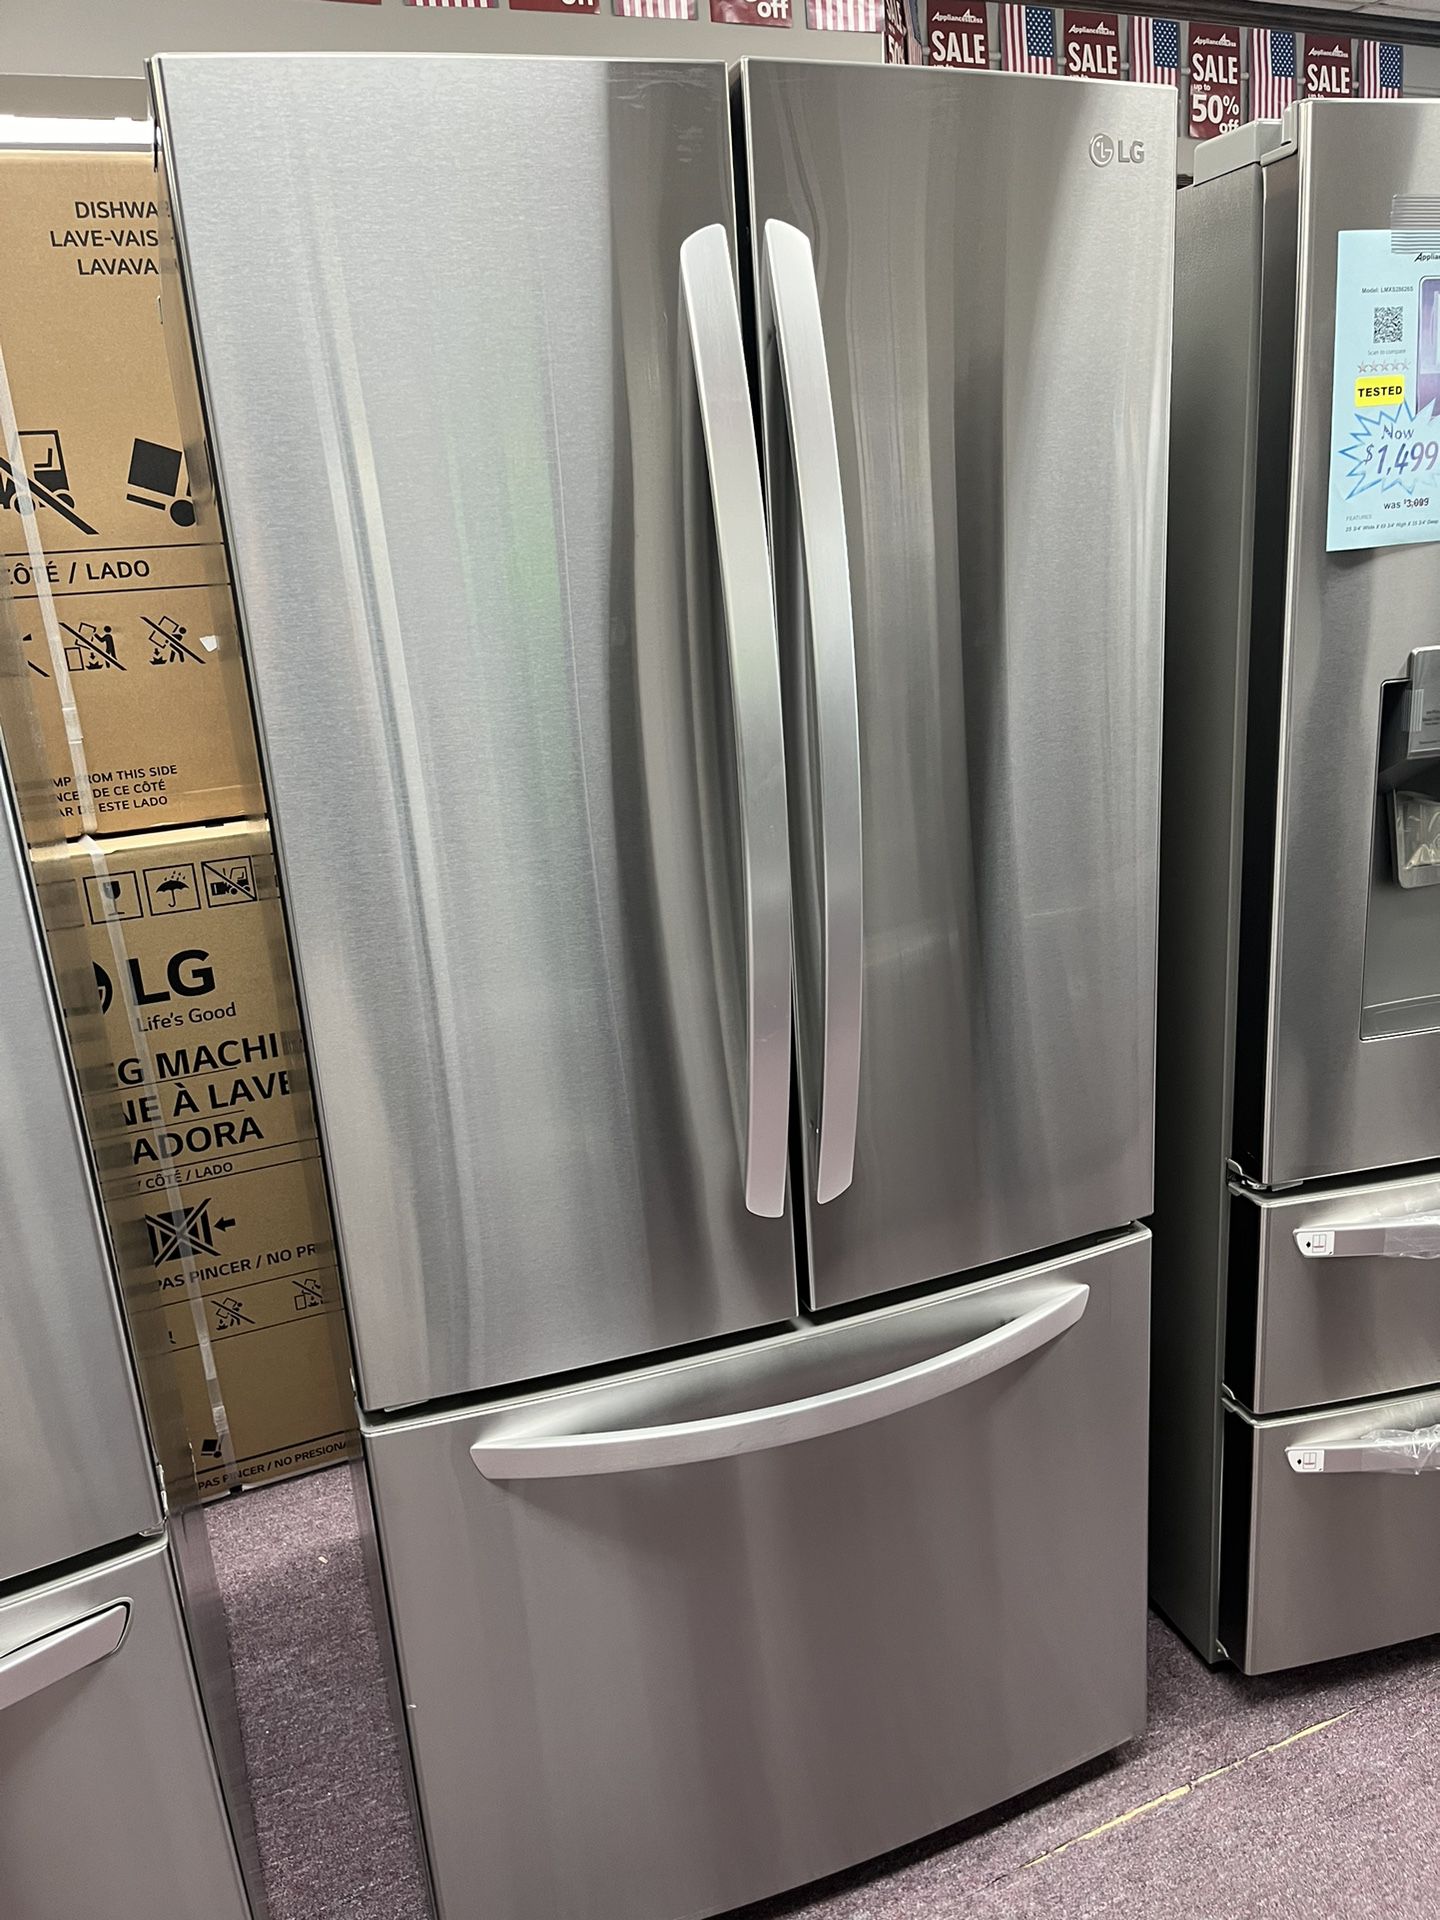 Refrigerator-LG Open Box 30” Refrigerator With 1 Year Warranty 